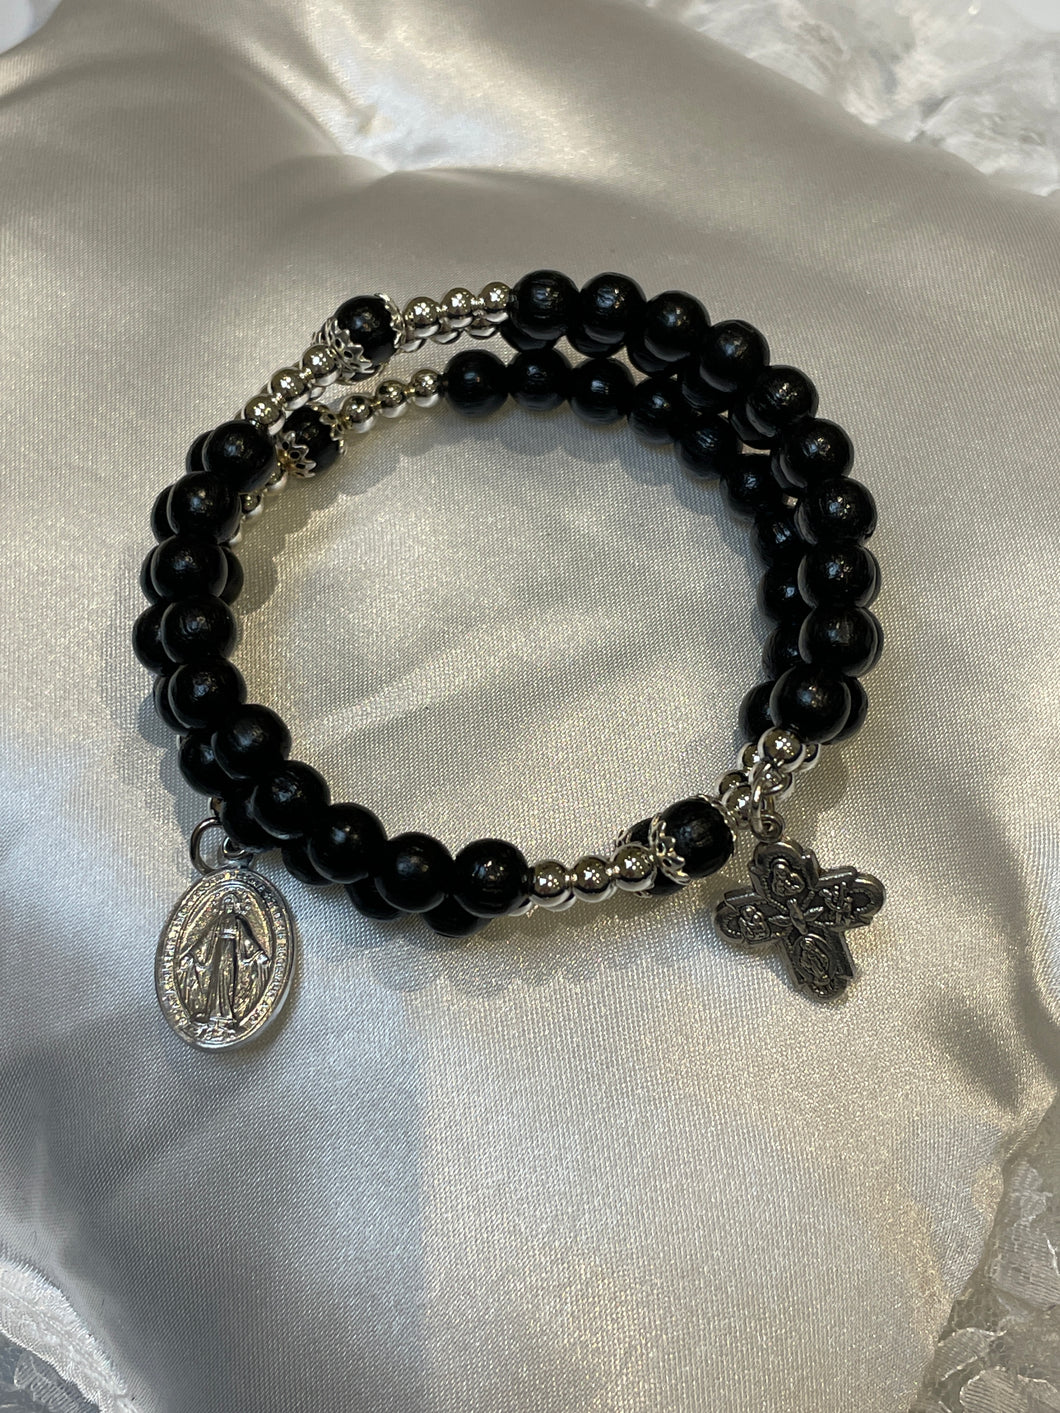 Long Black Gemstone Rosary Bracelet with Miraculous Medal Charm